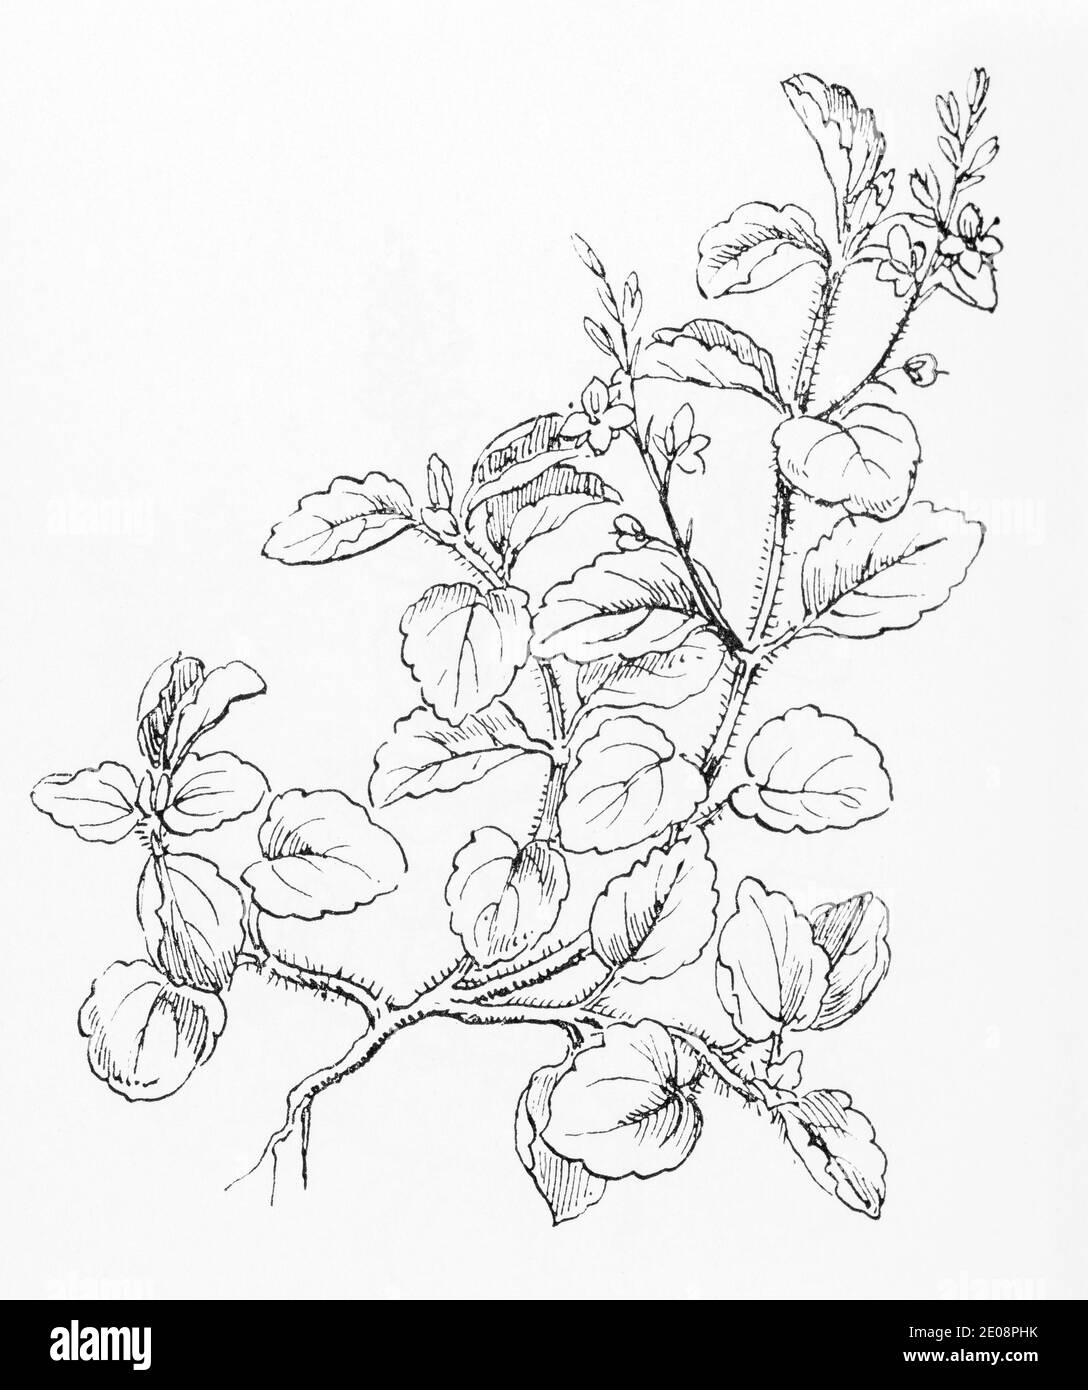 Ancienne gravure d'illustration botanique de Mountain Speedwell, Wood Speedwell / Veronica montana. Voir Remarques Banque D'Images